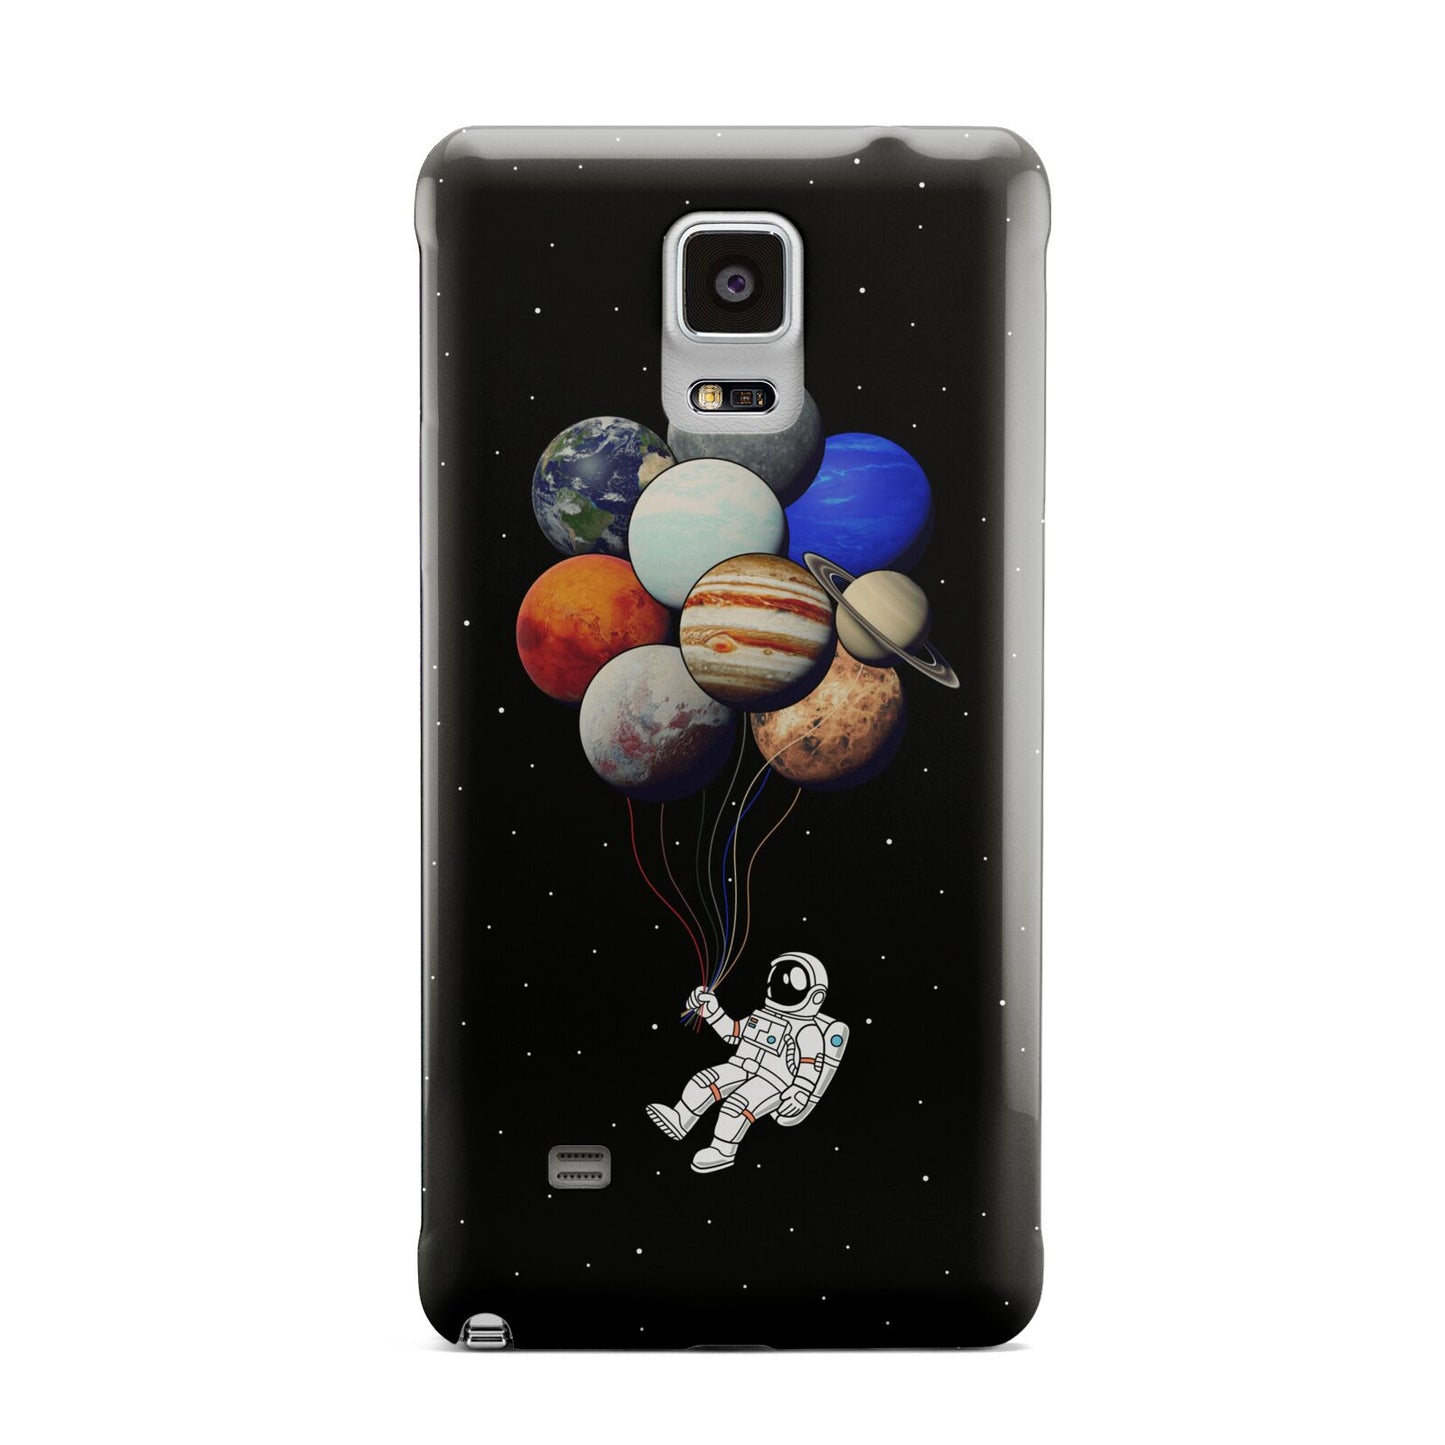 Astronaut Planet Balloons Samsung Galaxy Note 4 Case